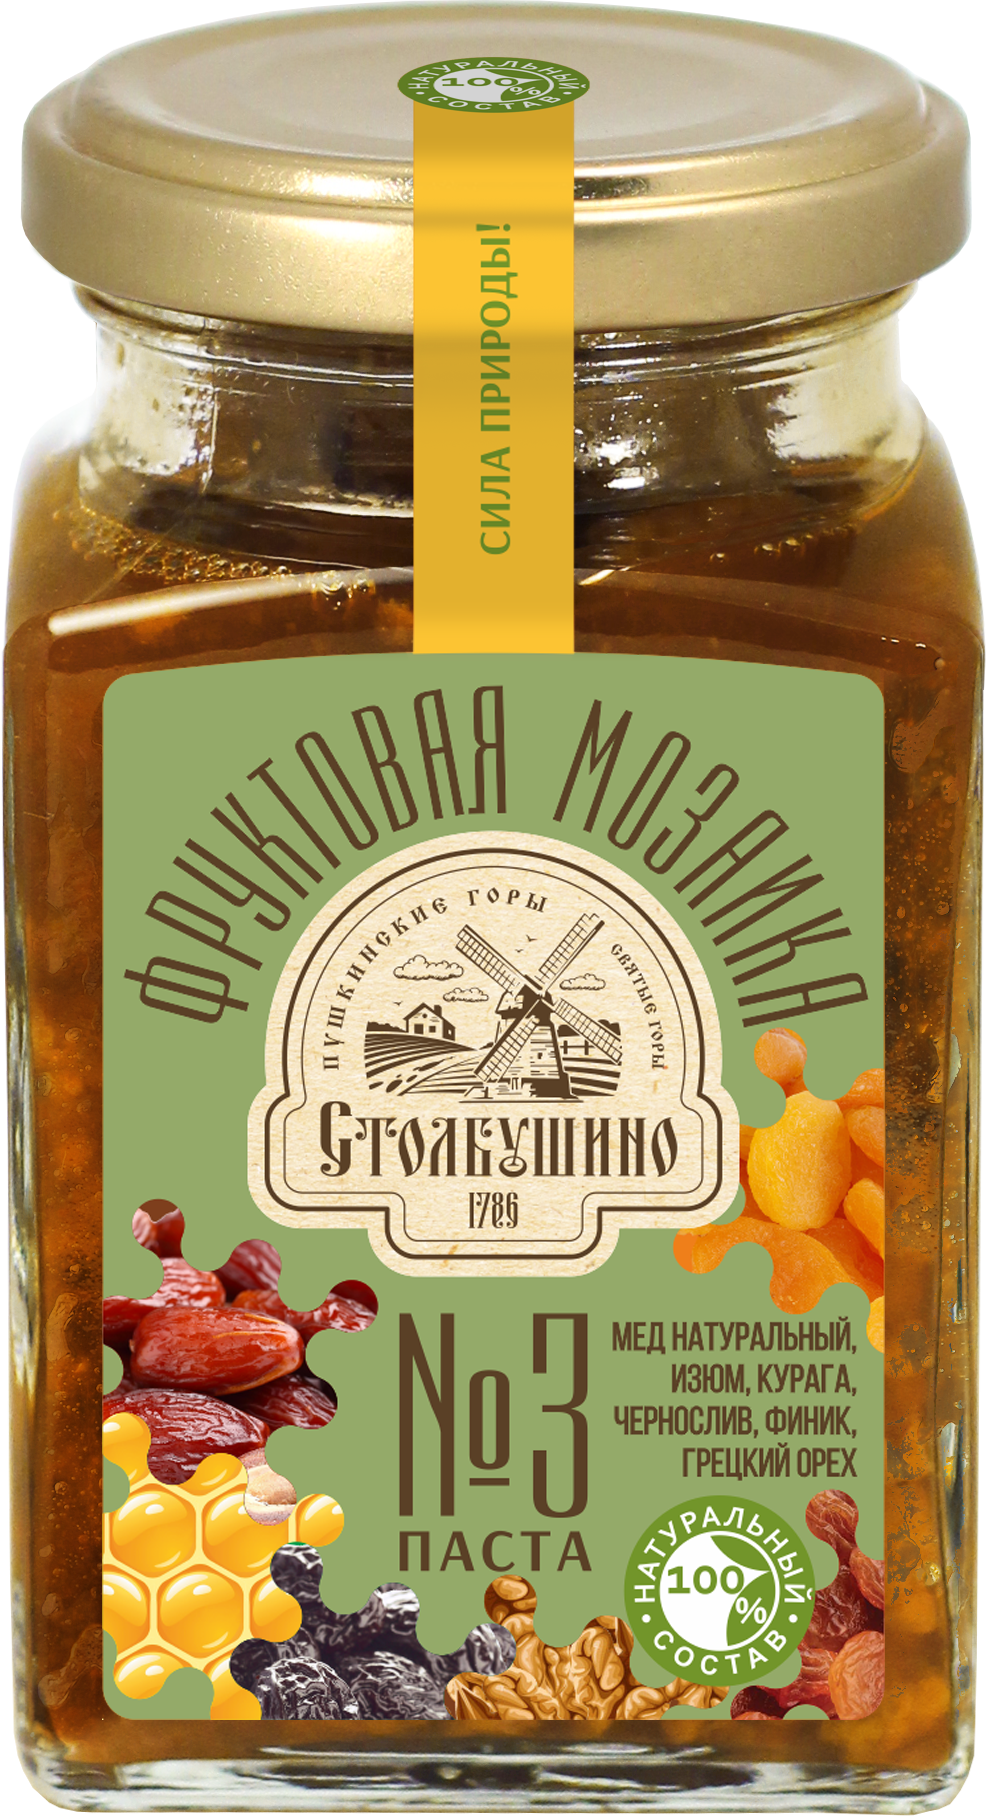 Stolbushinskaya Frucht Mosaik Frucht- und Nusspaste (Honig, Sultaninen, Aprikosen, Pflaumen, Datteln, Walnüsse) Nr. 3   